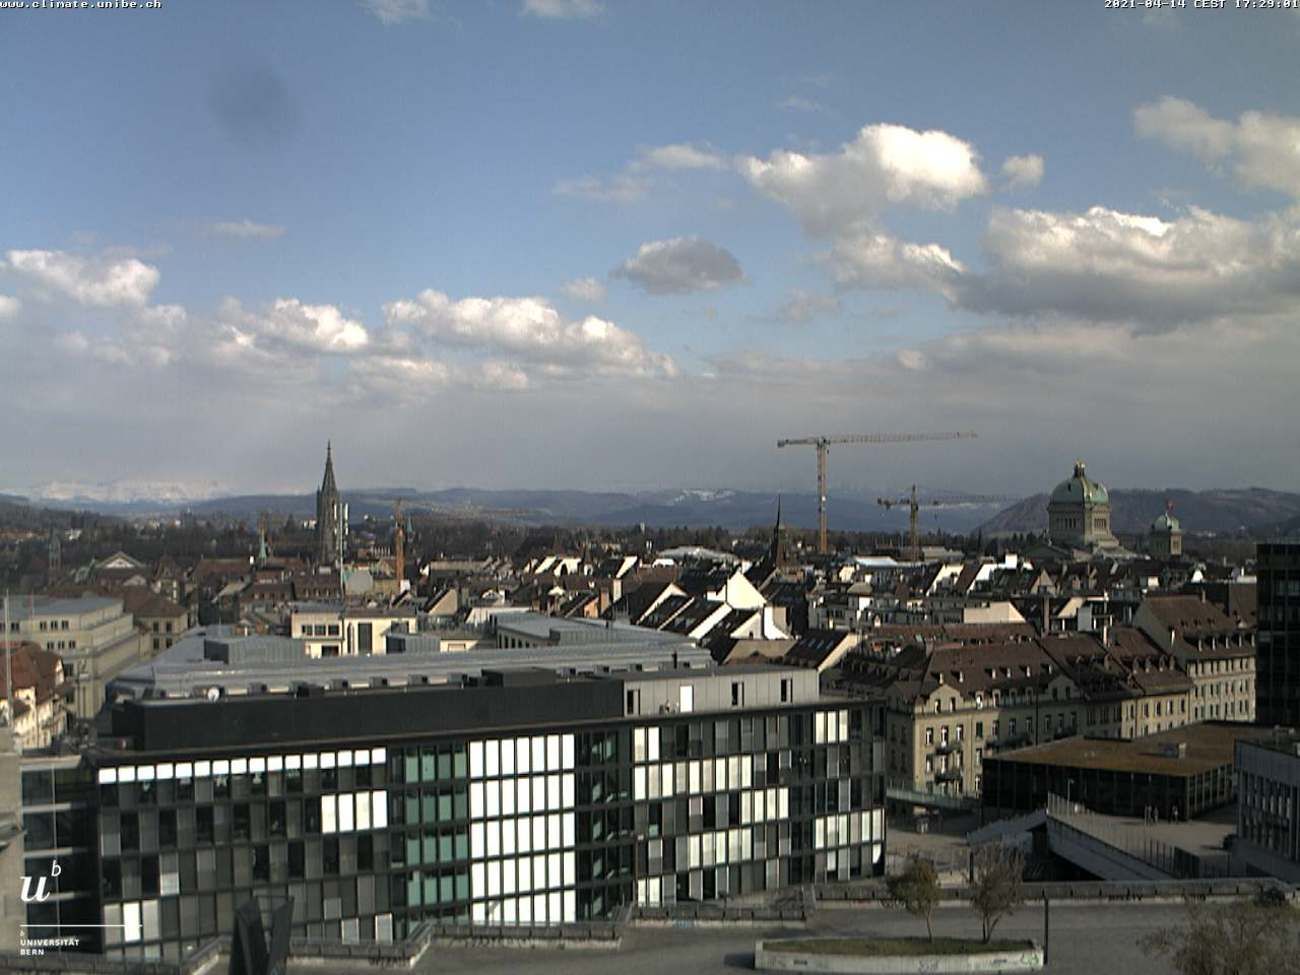 Bern: University of Bern